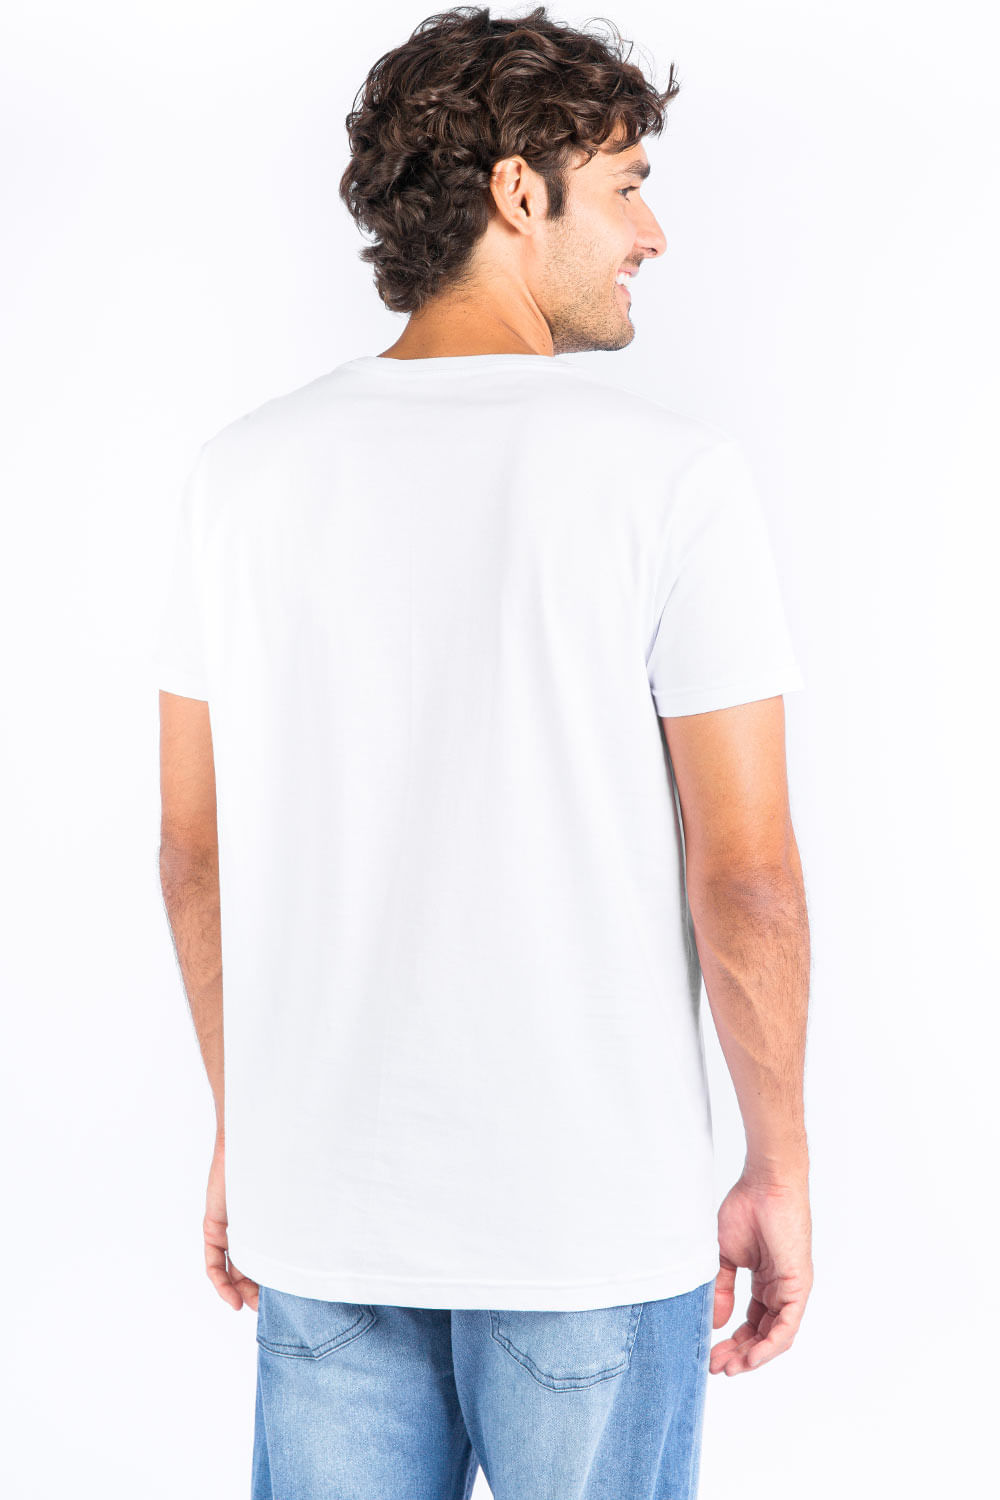 T-shirt branca: 1 peça básica 4 opções de looks despojados - Modaaz